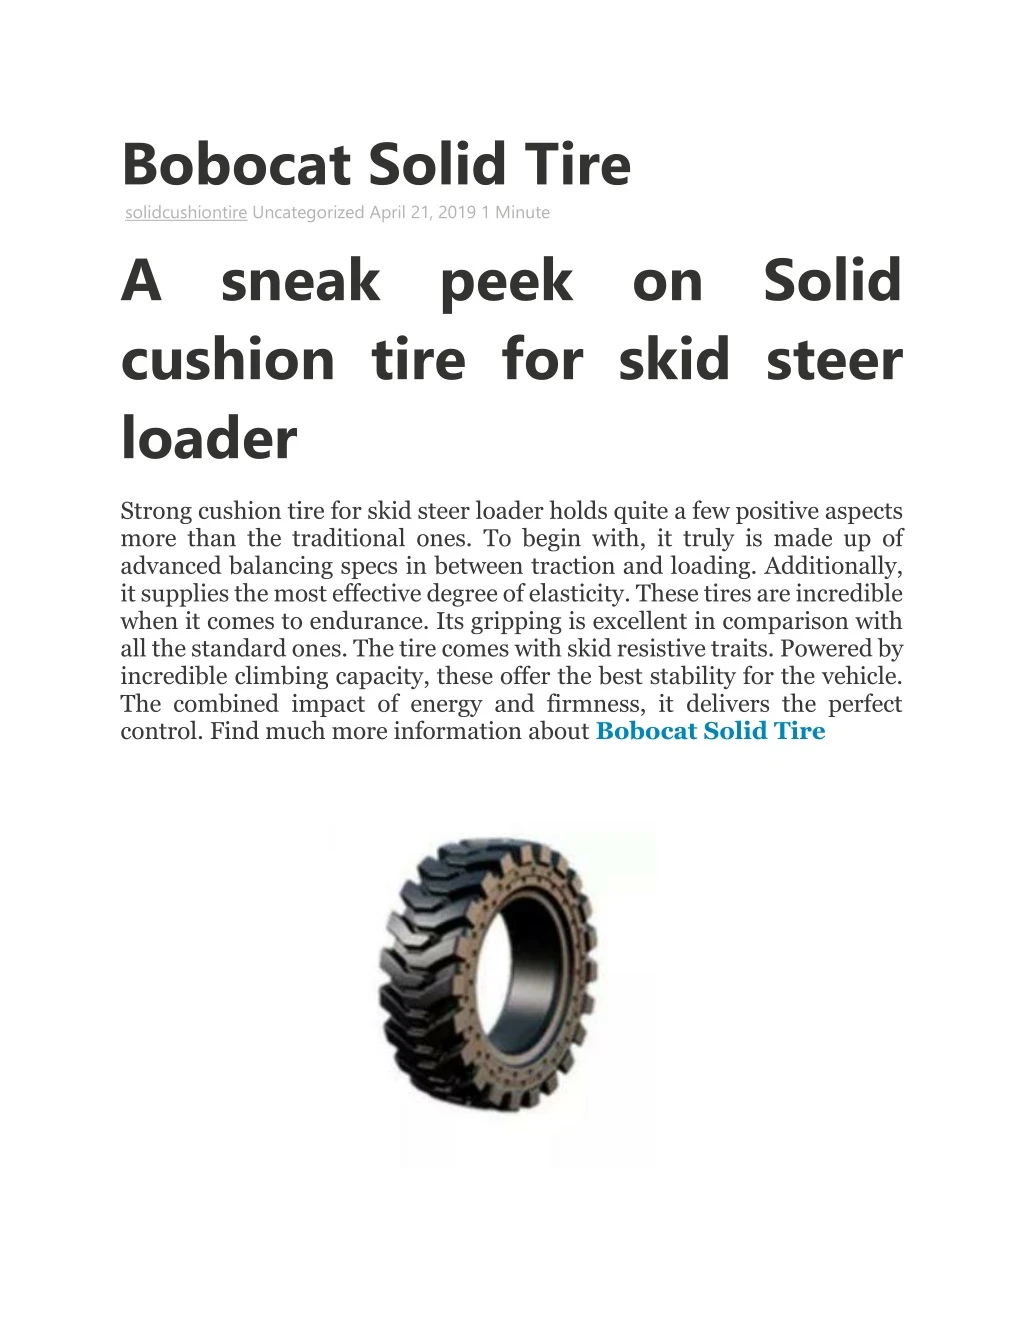 bobocat solid tire solidcushiontire uncategorized